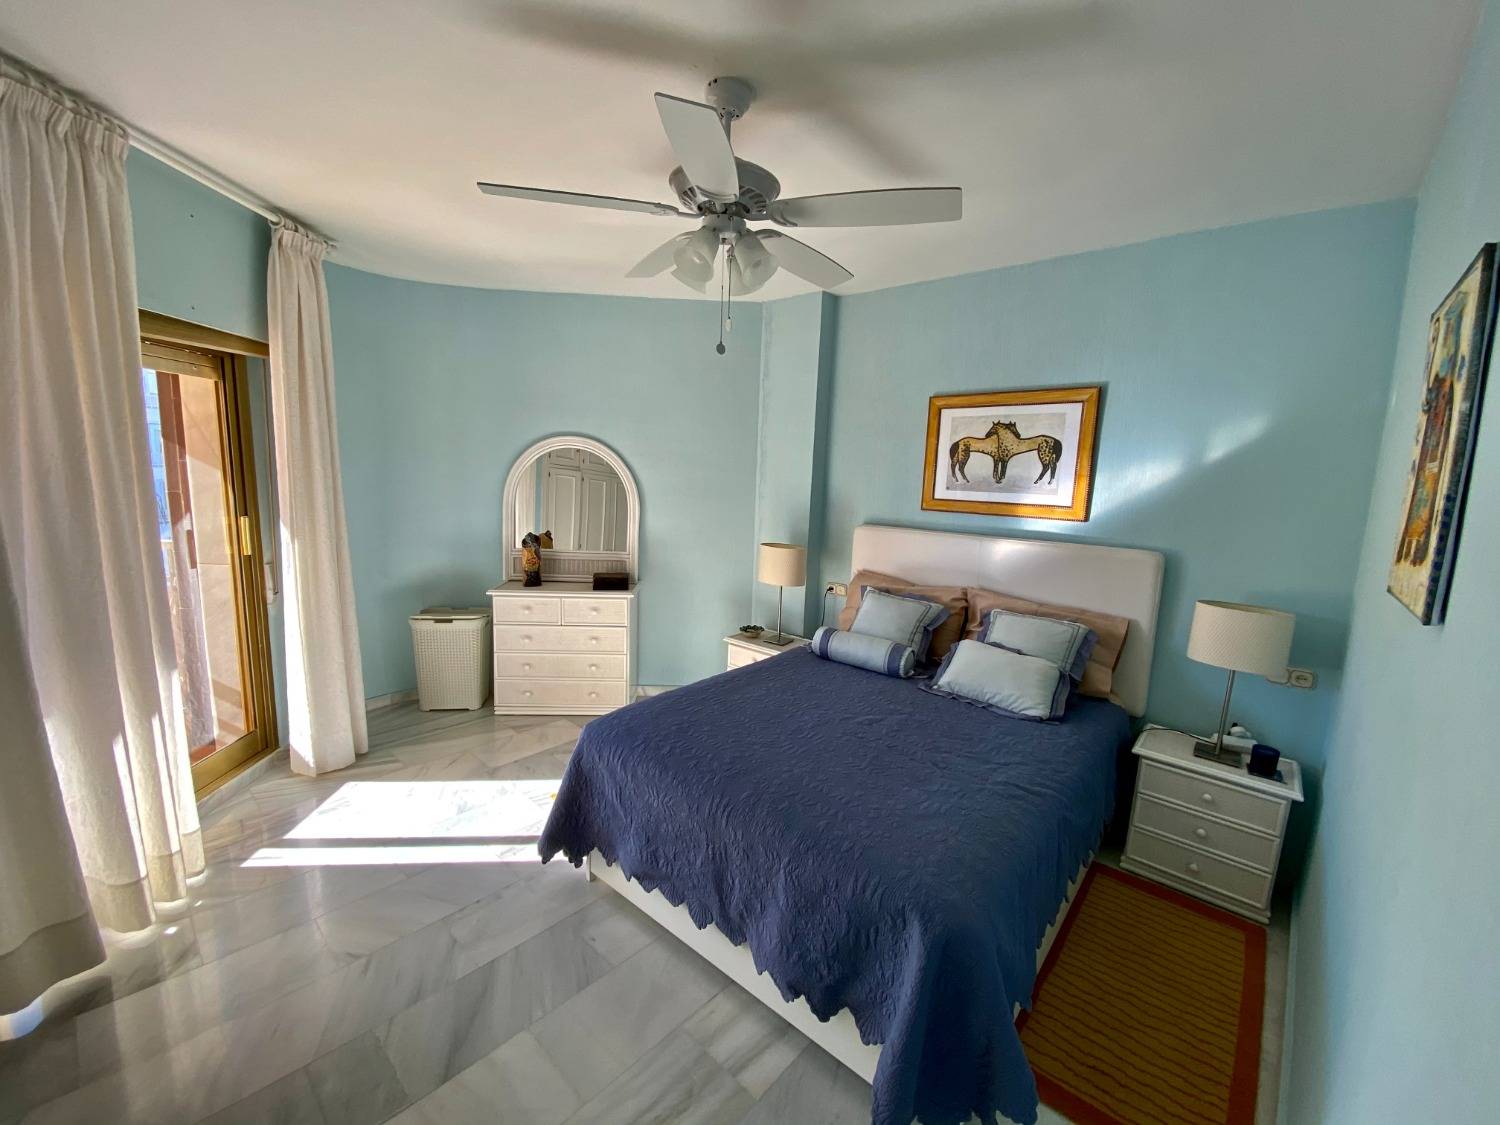 It is your beach house, in Fuengirola, 3 bedrooms, wifi, A/C, enjoy it.